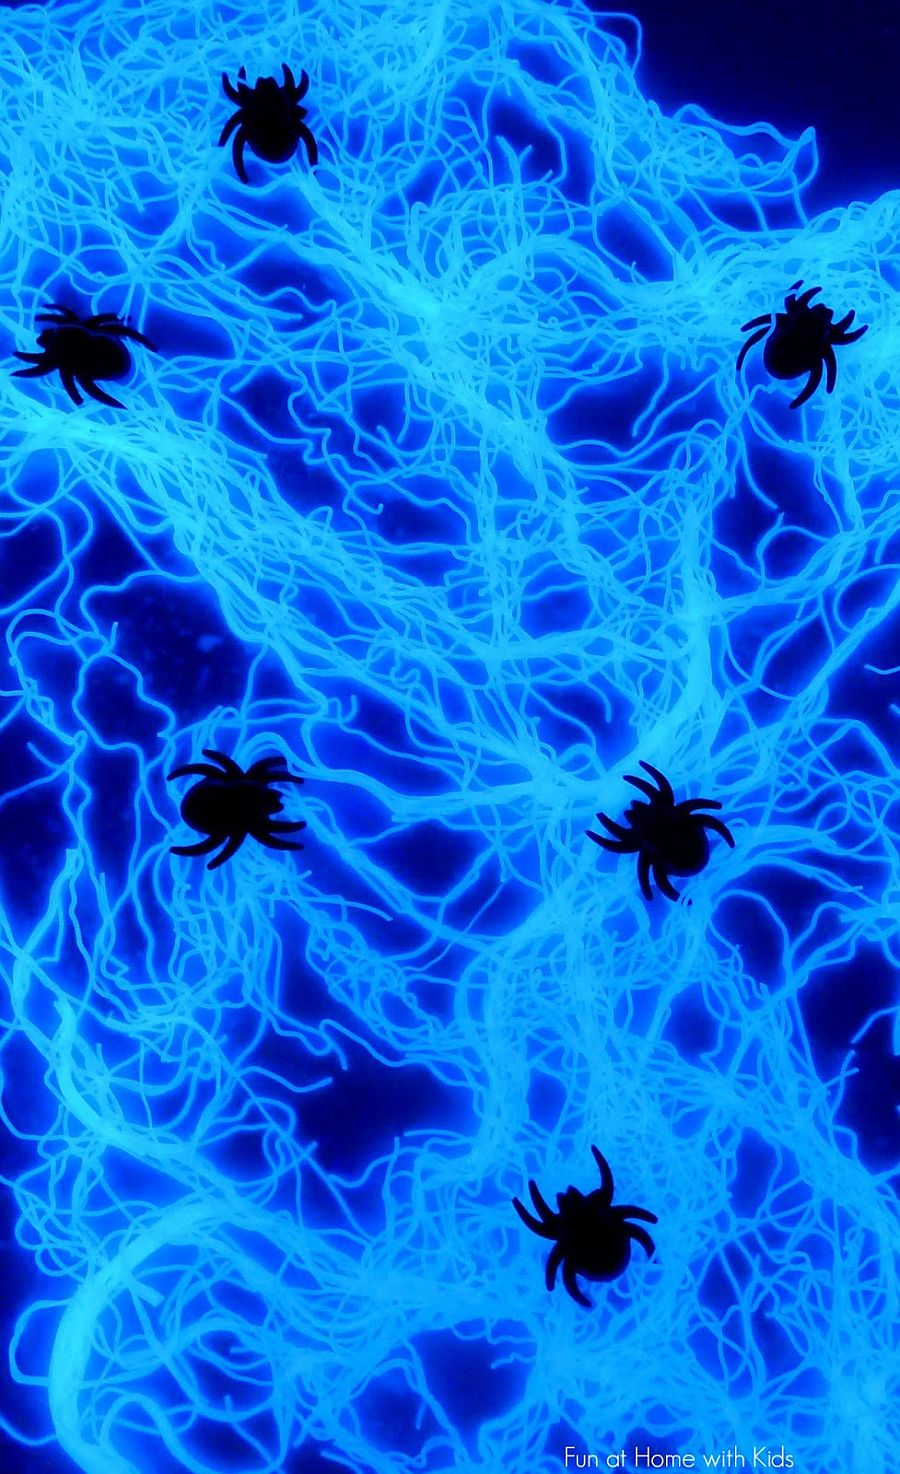 Edible-glowing-spiders-look-simply-stunning